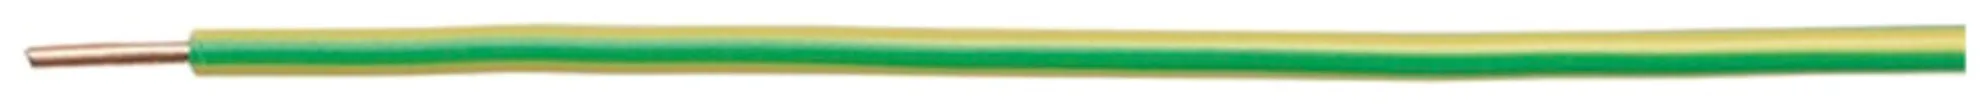 Fil N H07Z1-U sans halogène 1.5mm² 450/750V vert-jaune Cca 